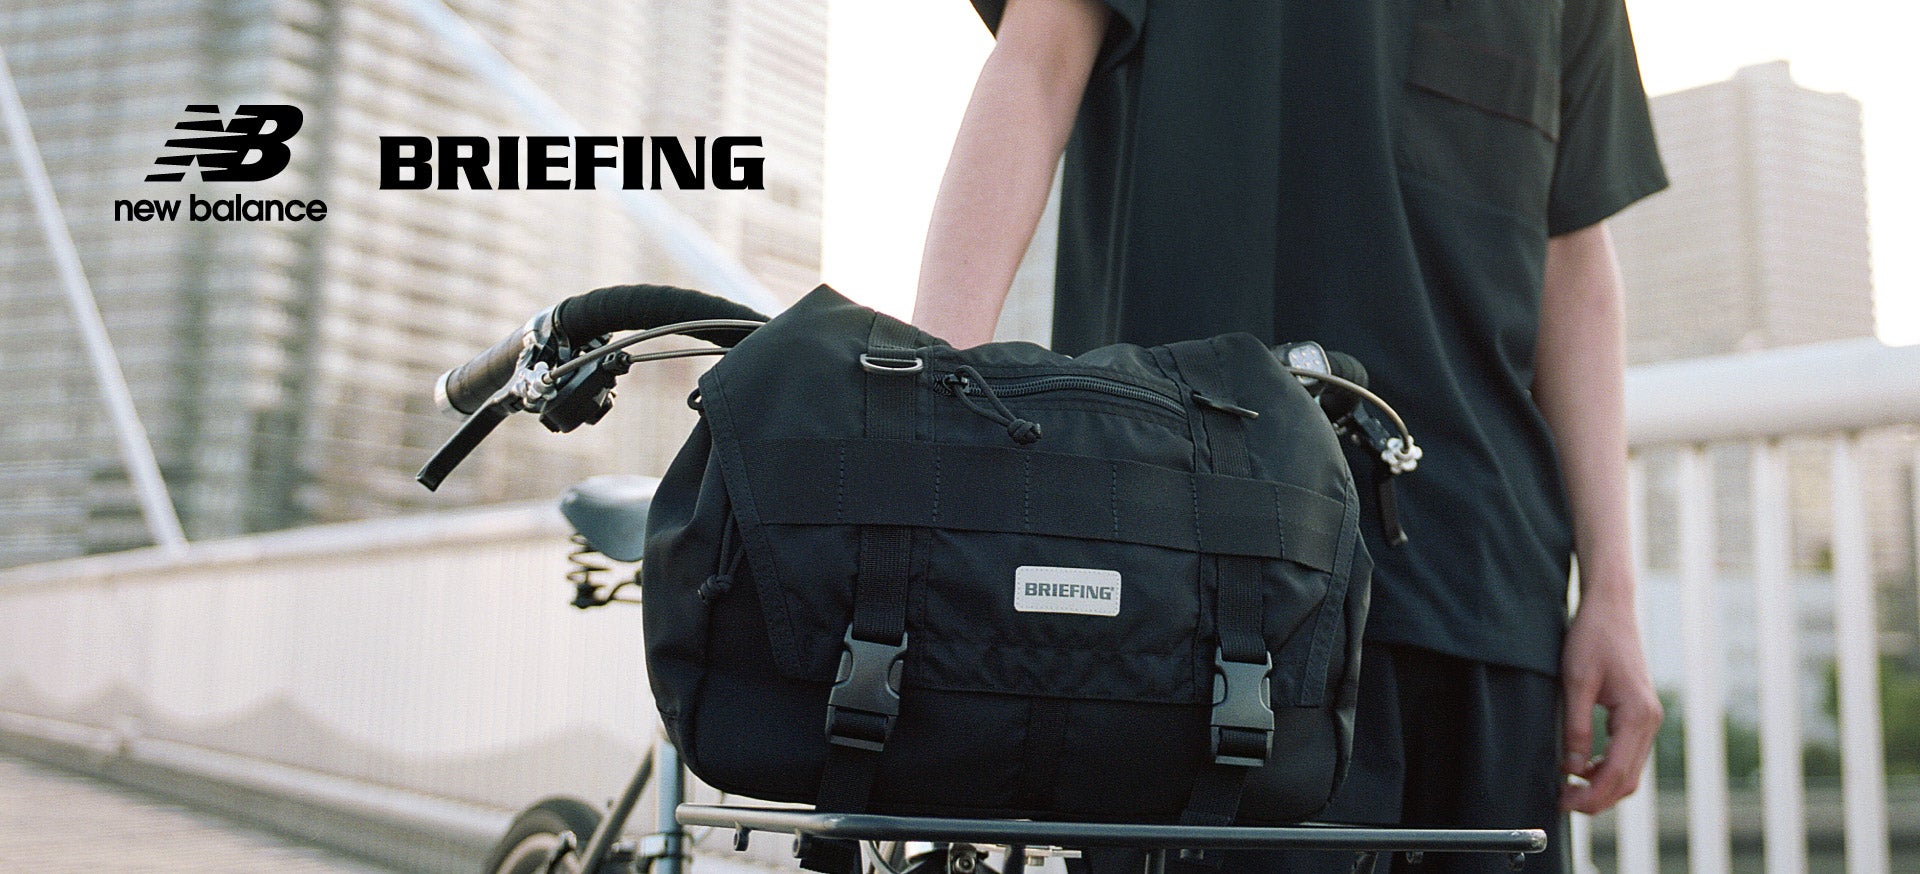 New Balance Top Loading Bag. ニューバランスの新スタンダード。多機能・大容量トップローディングバッグ。